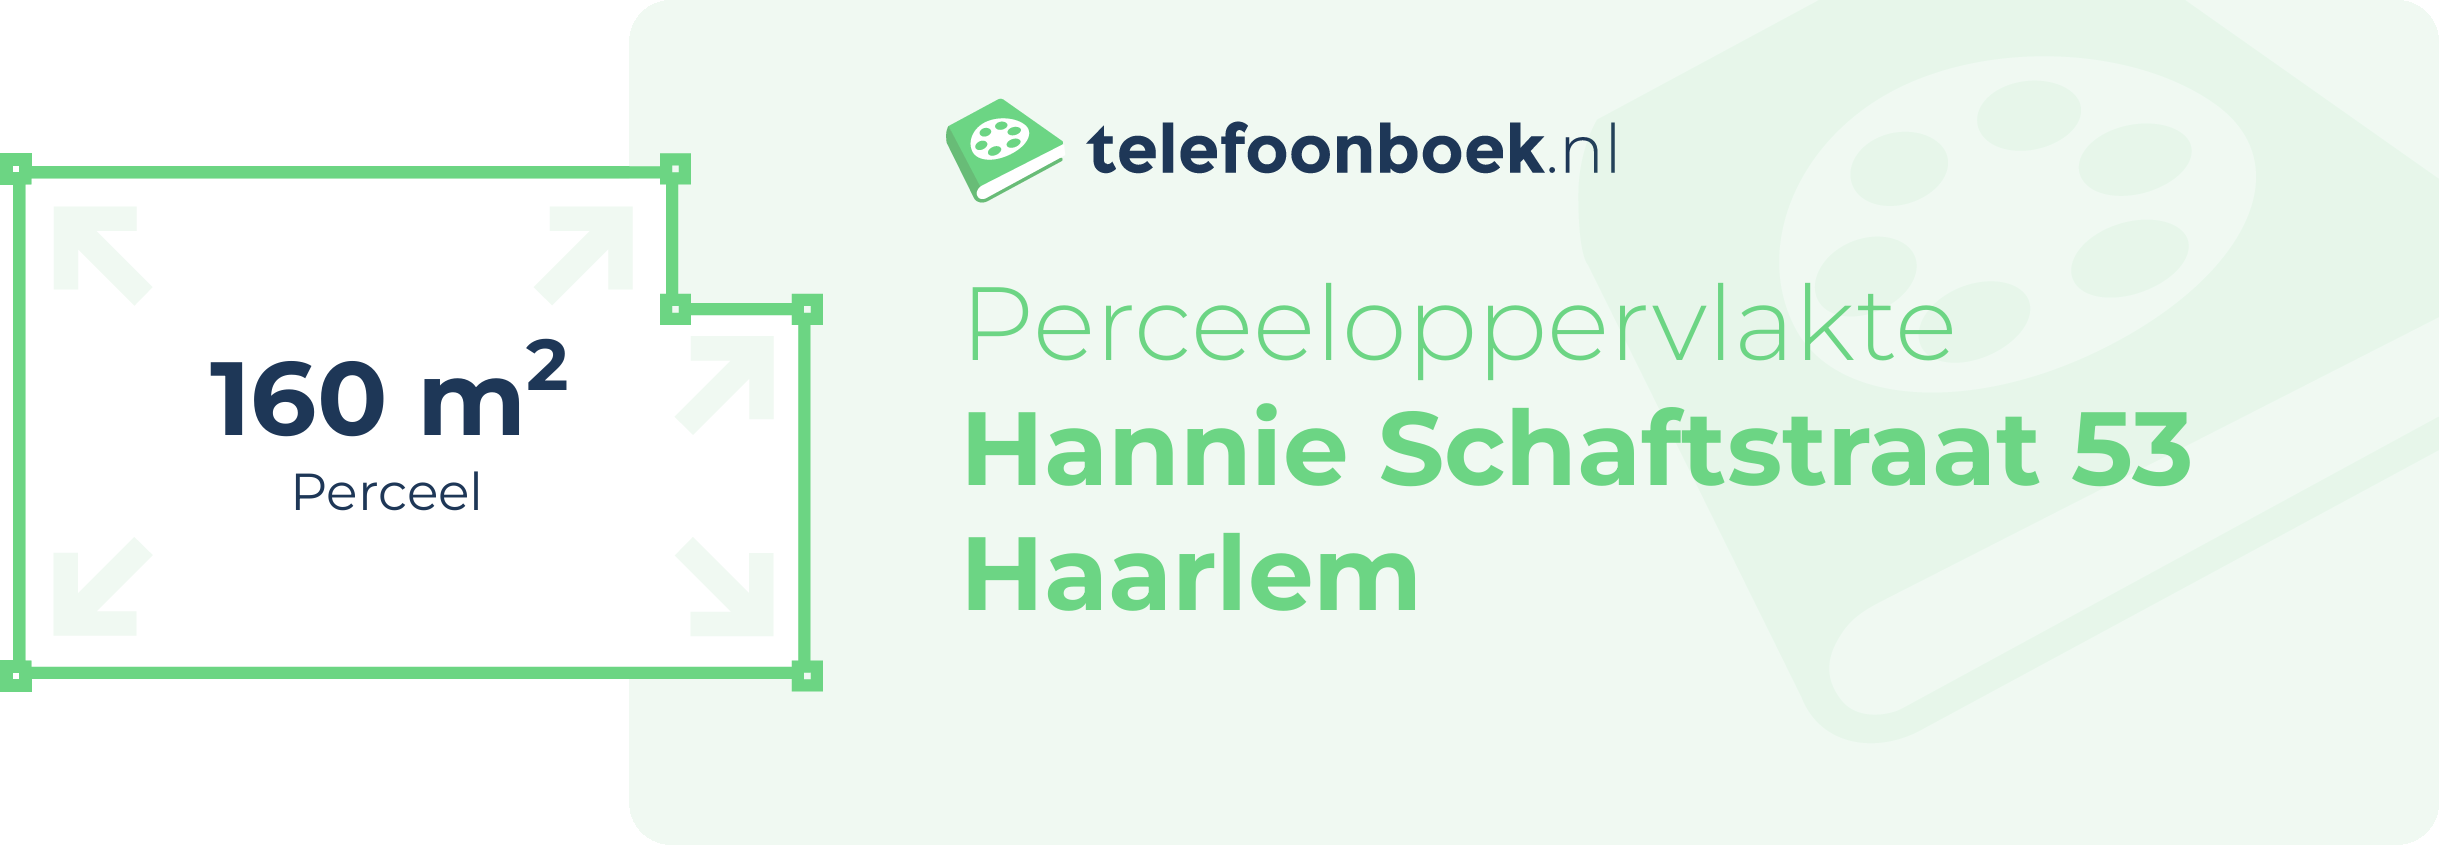 Perceeloppervlakte Hannie Schaftstraat 53 Haarlem